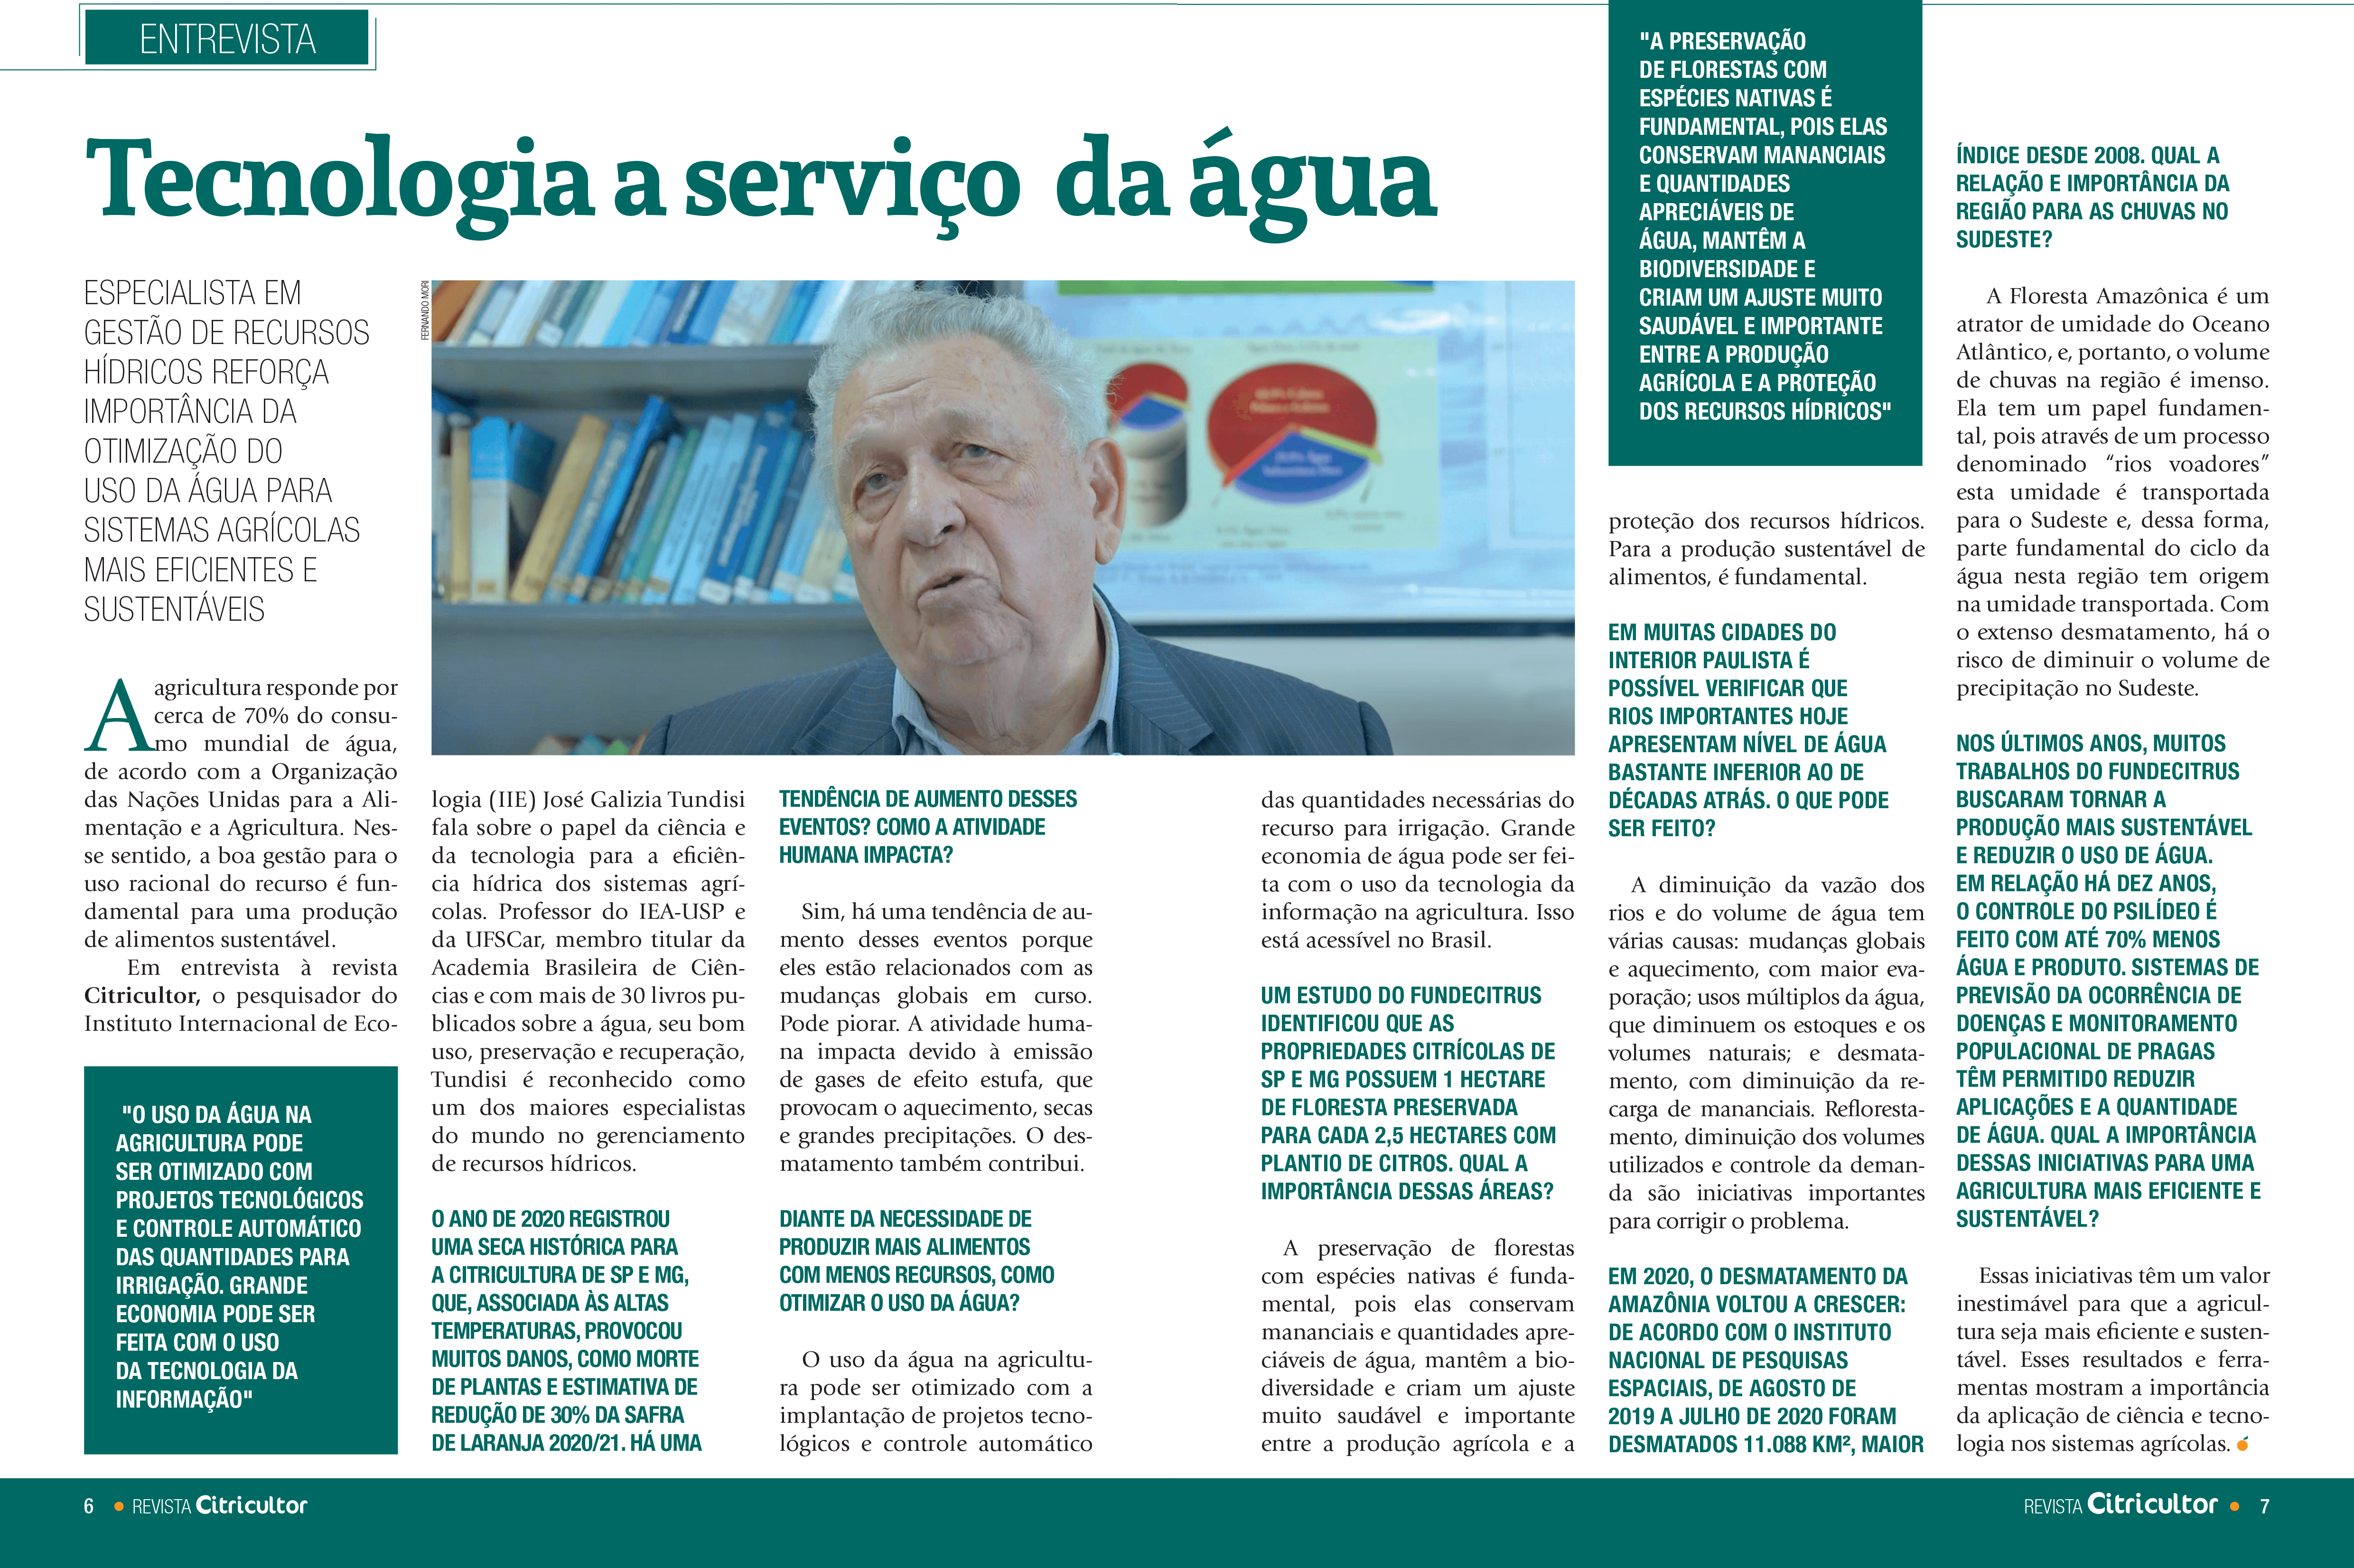 Entrevista Revista ZCitricultor